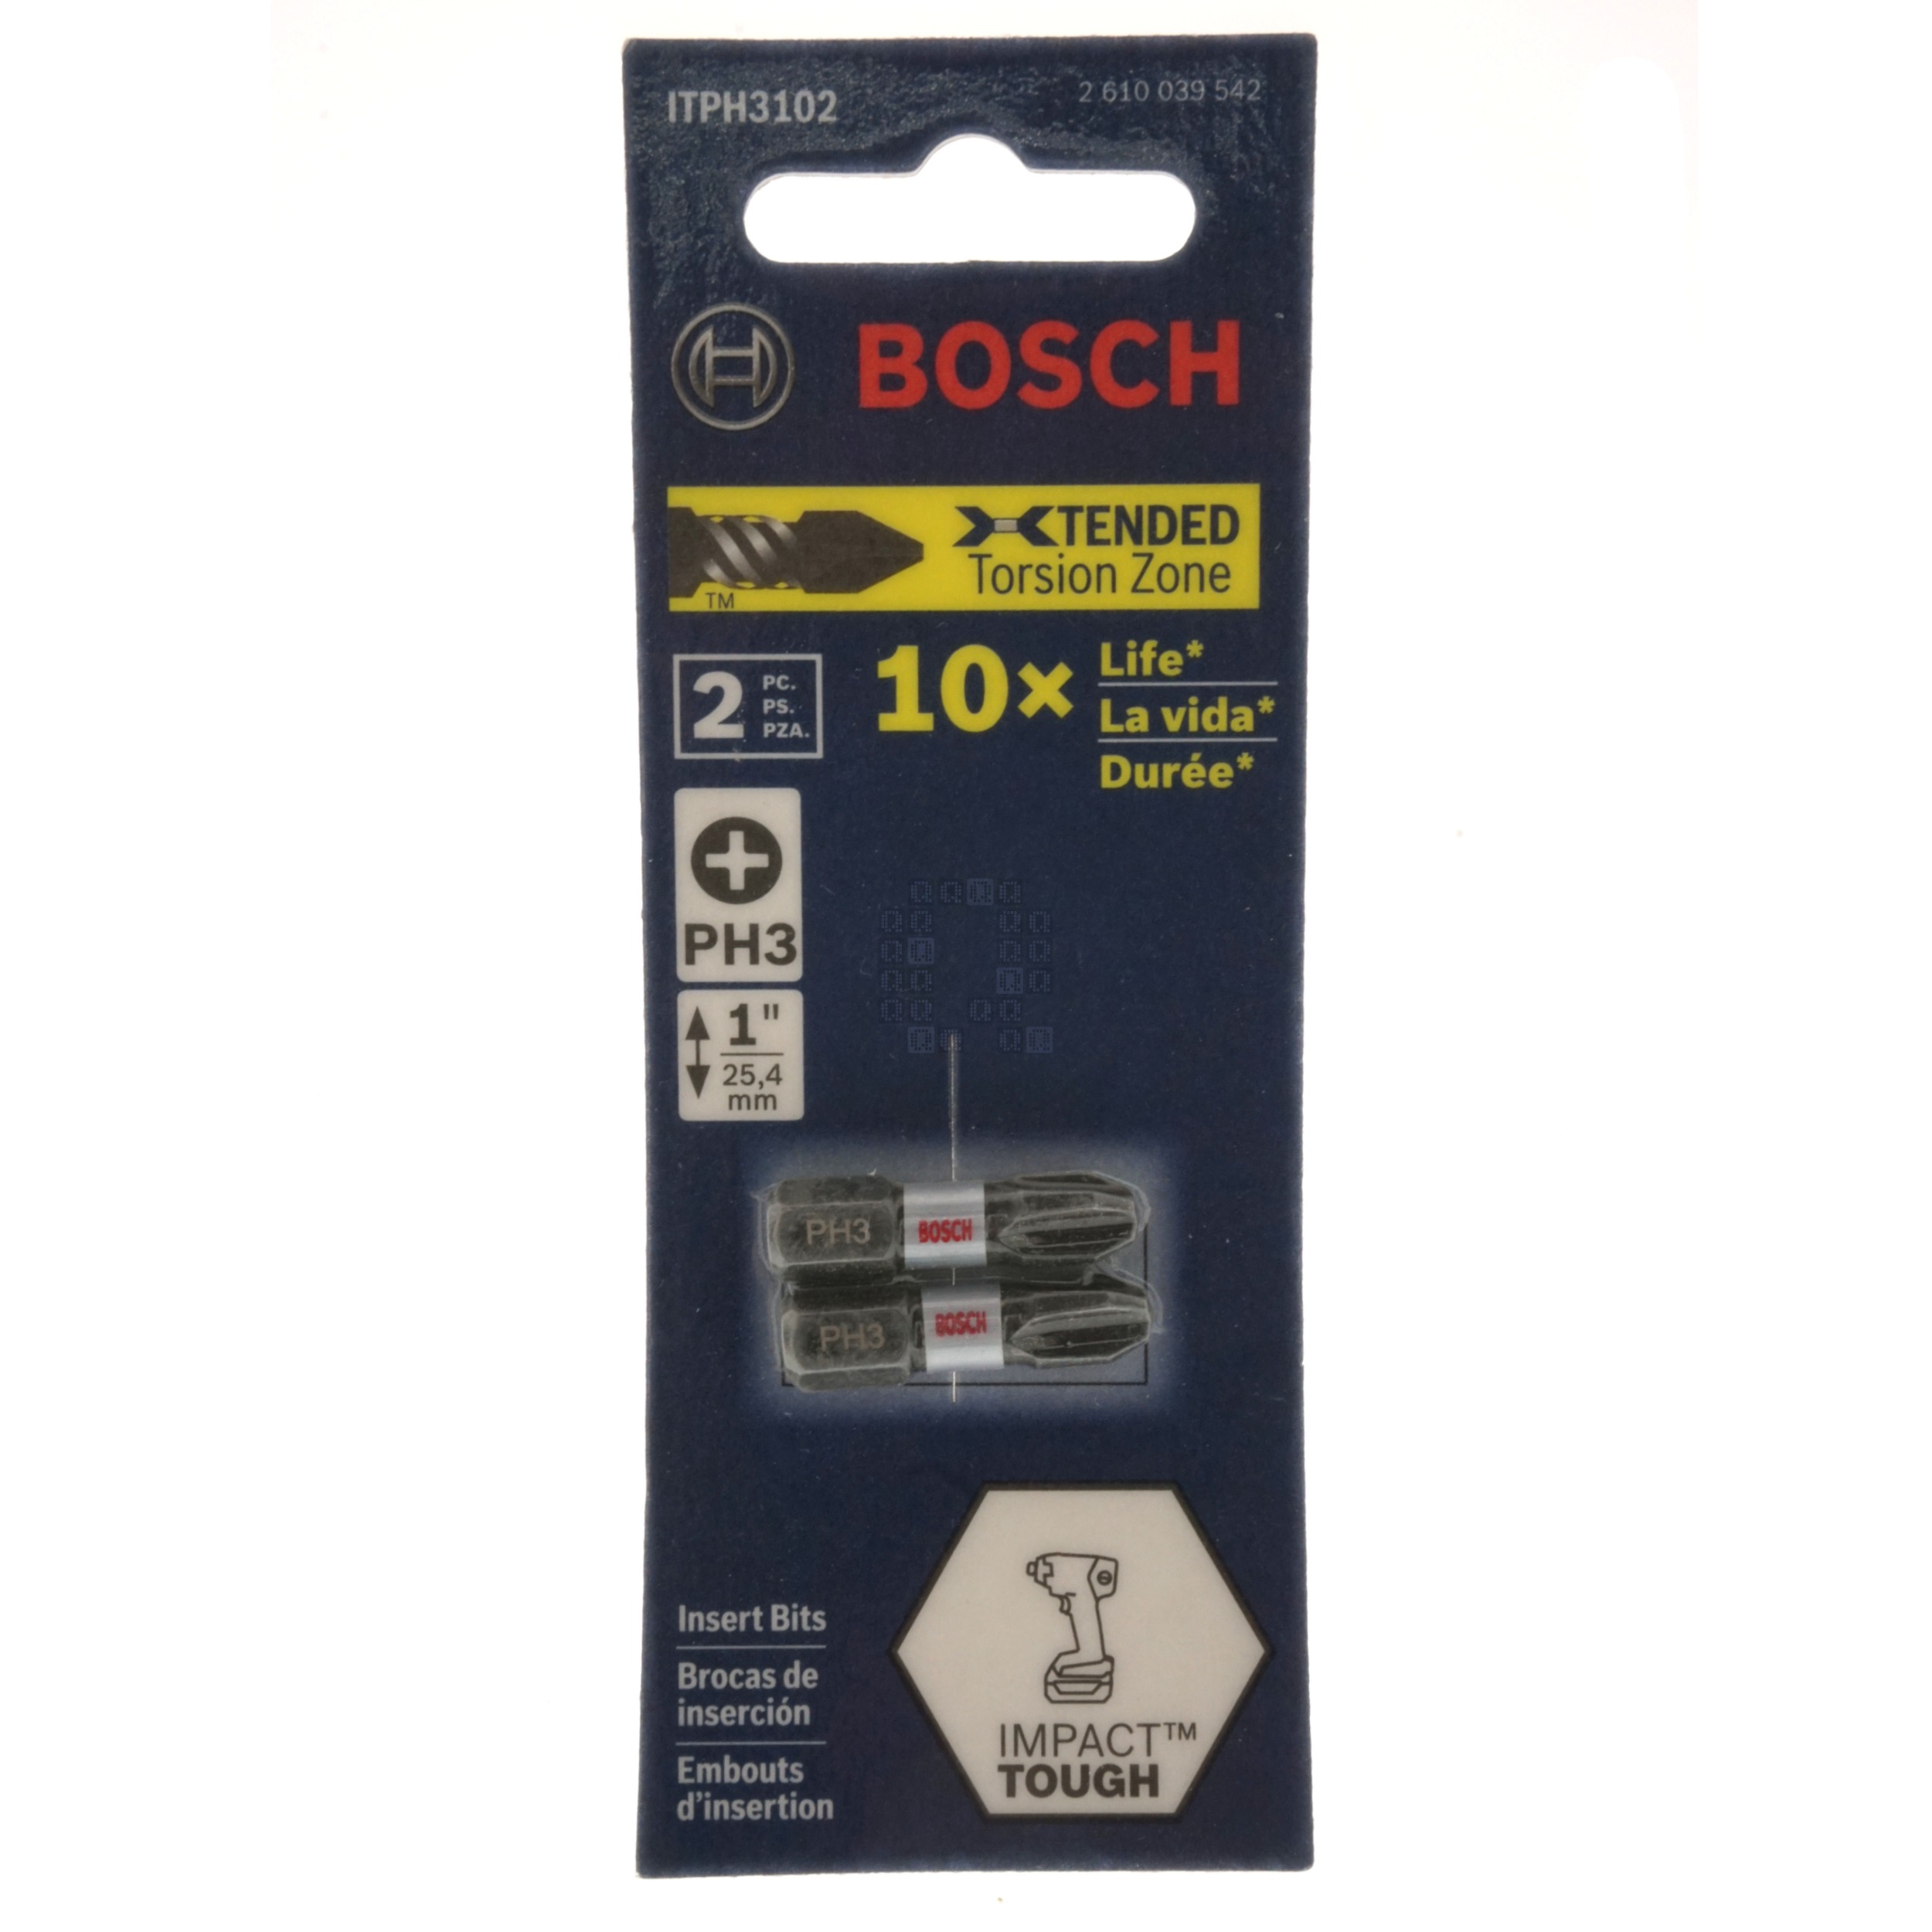 Bosch ITPH3102 Impact Tough #3 Phillips Insert Bits, 1" Length, 2-Pack, 2610039542